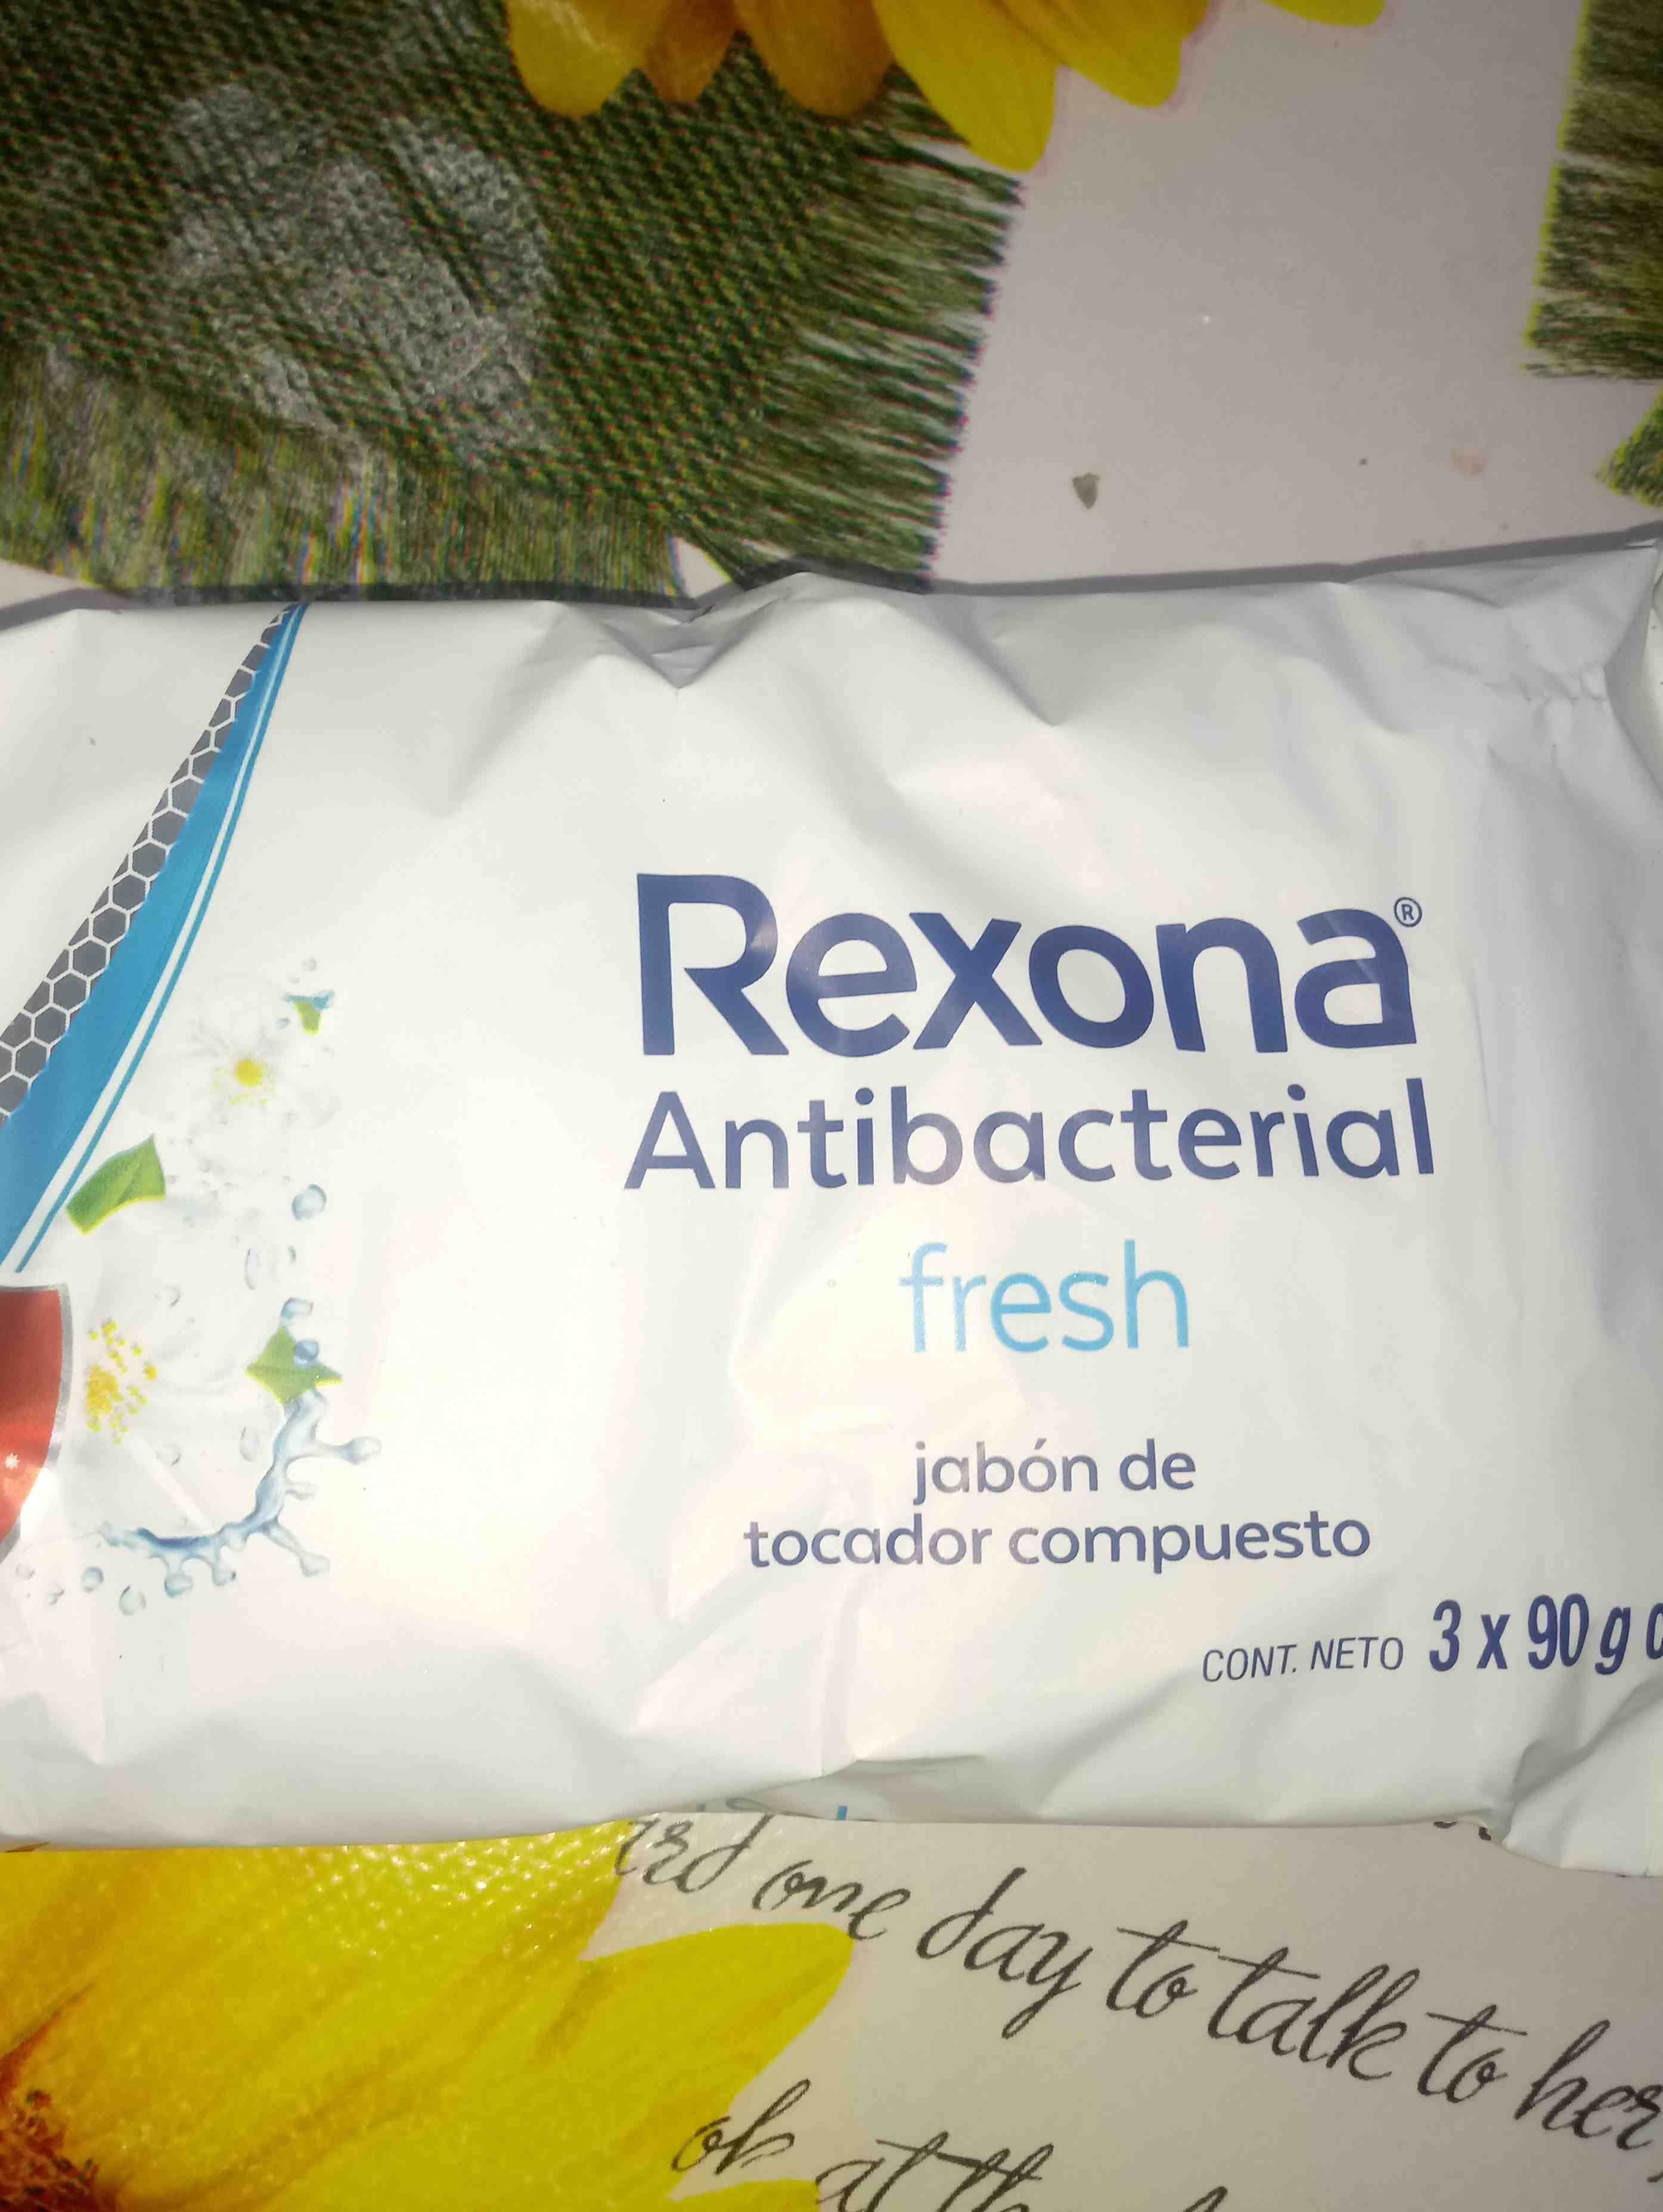 rexona antibacterial fresh - Product - en